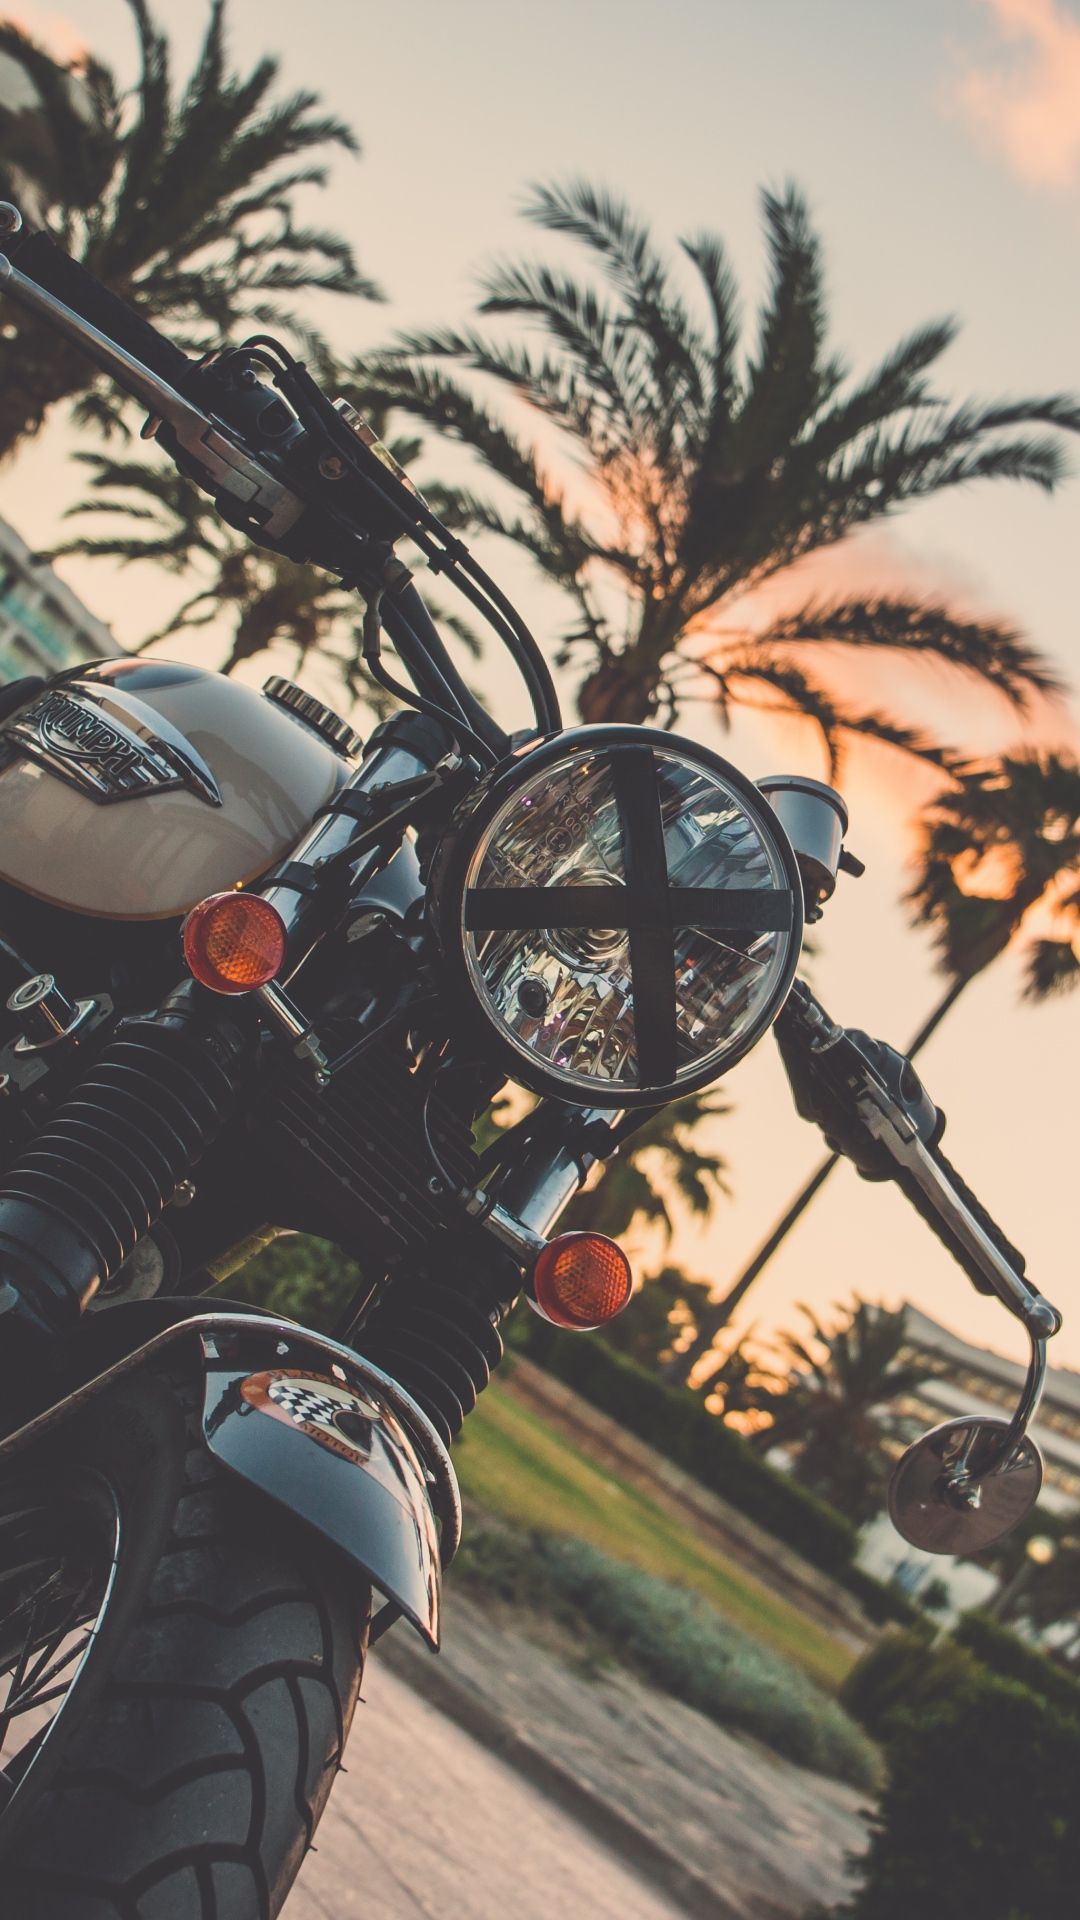  Motorrad Hintergrundbild 1080x1920. Fondos de pantalla